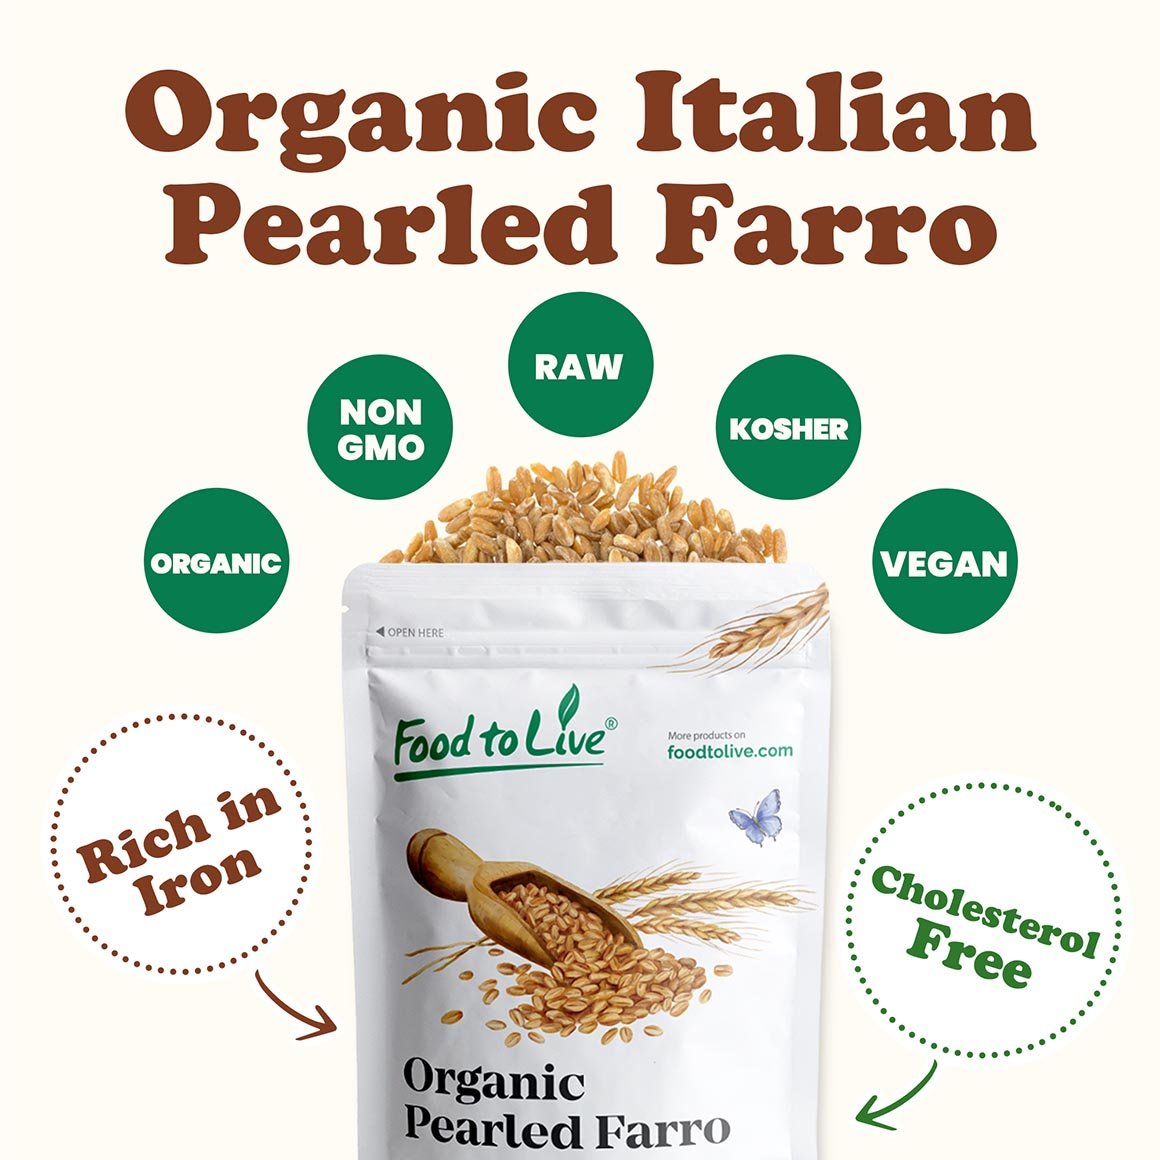 organic-italian-pearled-farro-2-min-upd